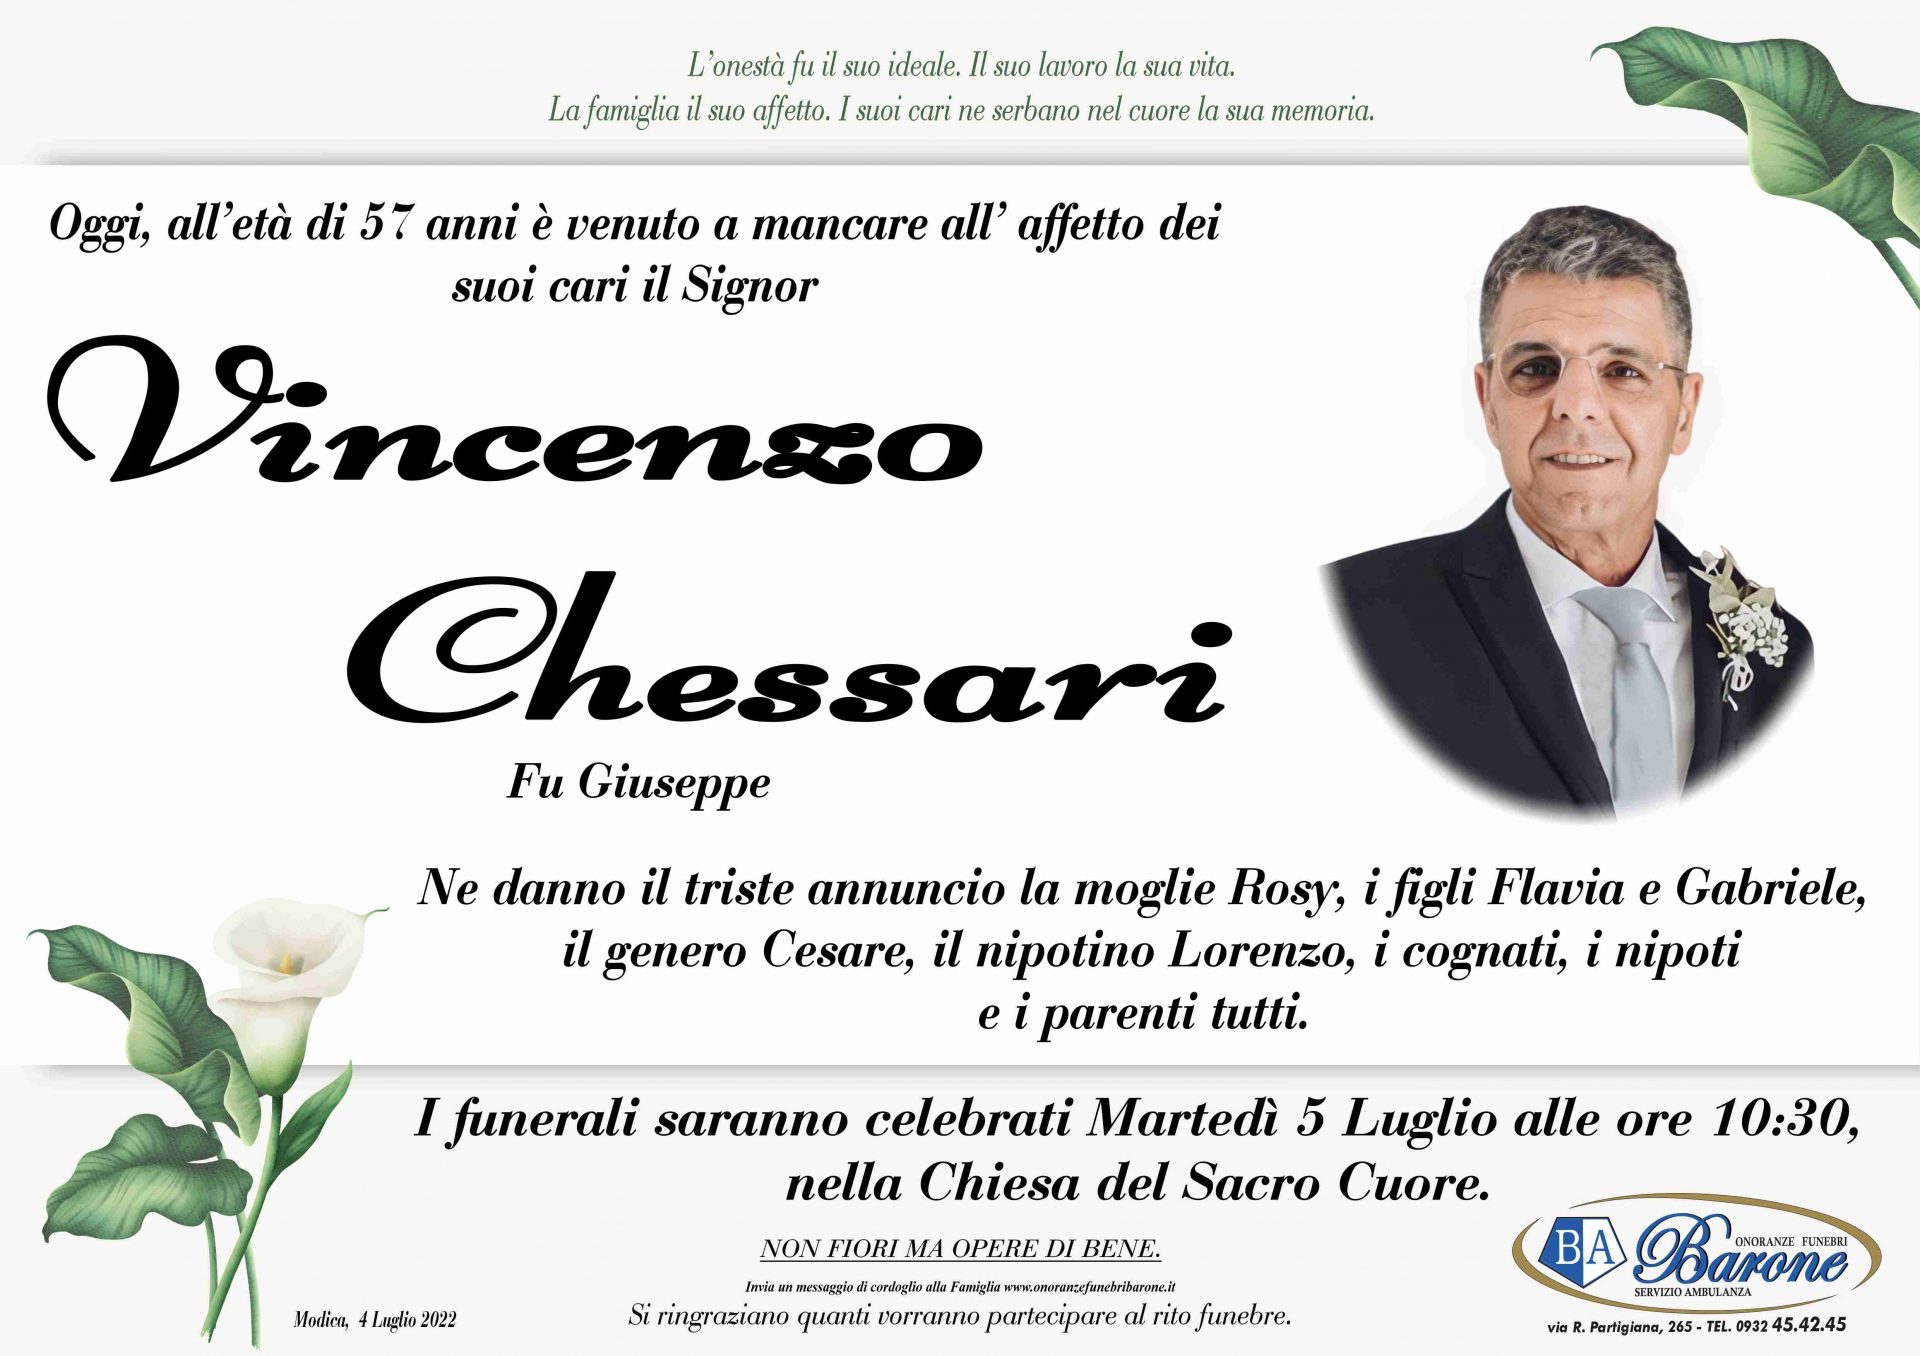 Vincenzo Chessari